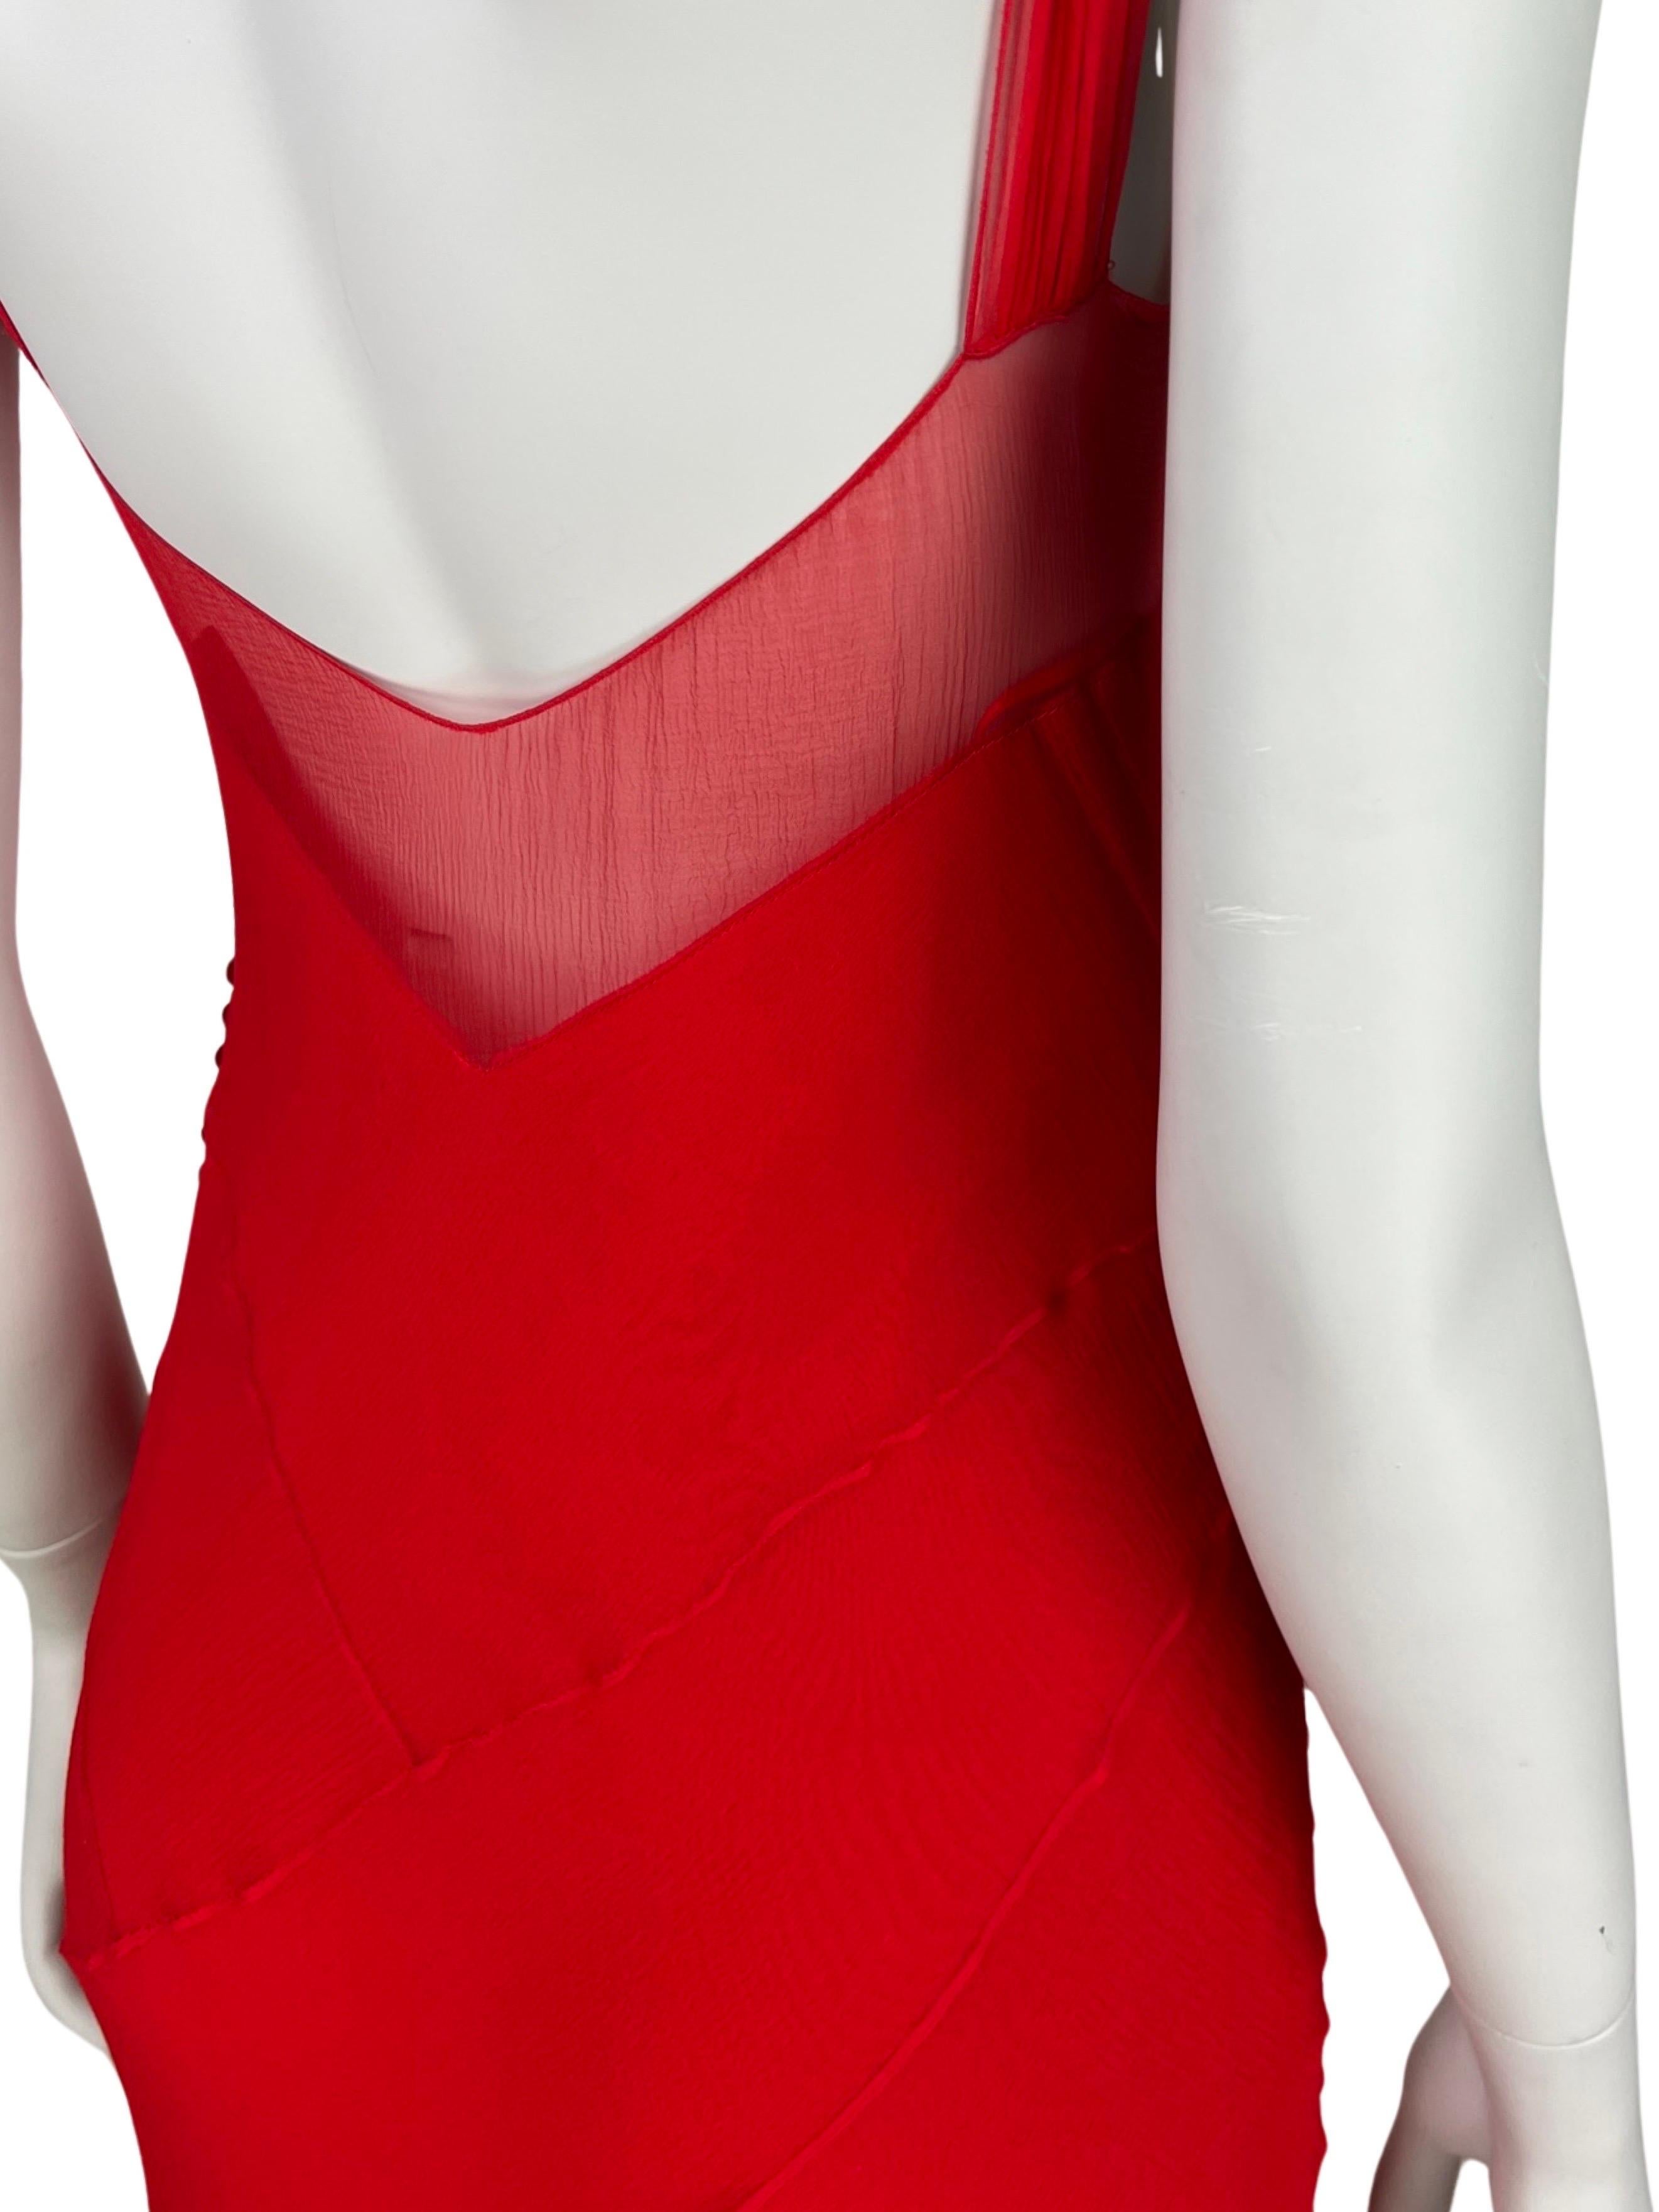 Women's Dior by John Galliano Spring 2004 Red Bias Cut Silk Chiffon Dress